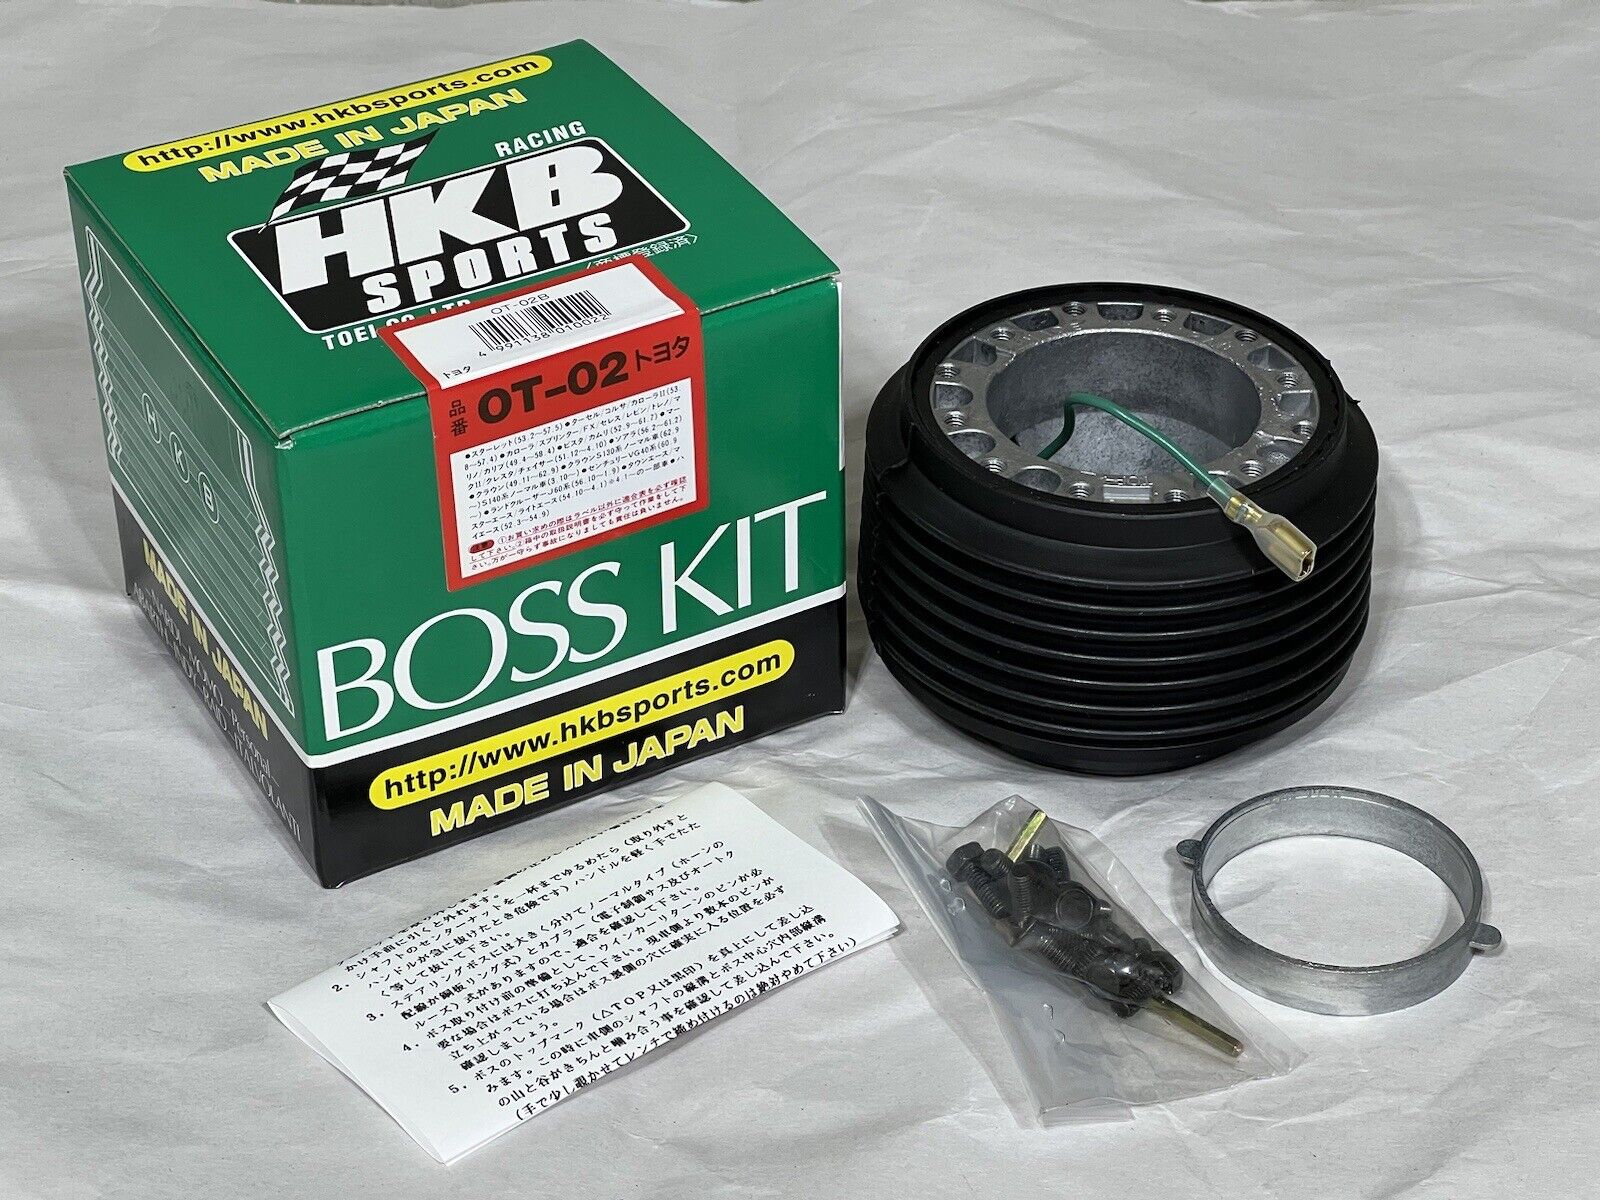 HKB SPORTS Steering Wheel Adapter Kit Boss Kit 76-88 Toyota Cressida